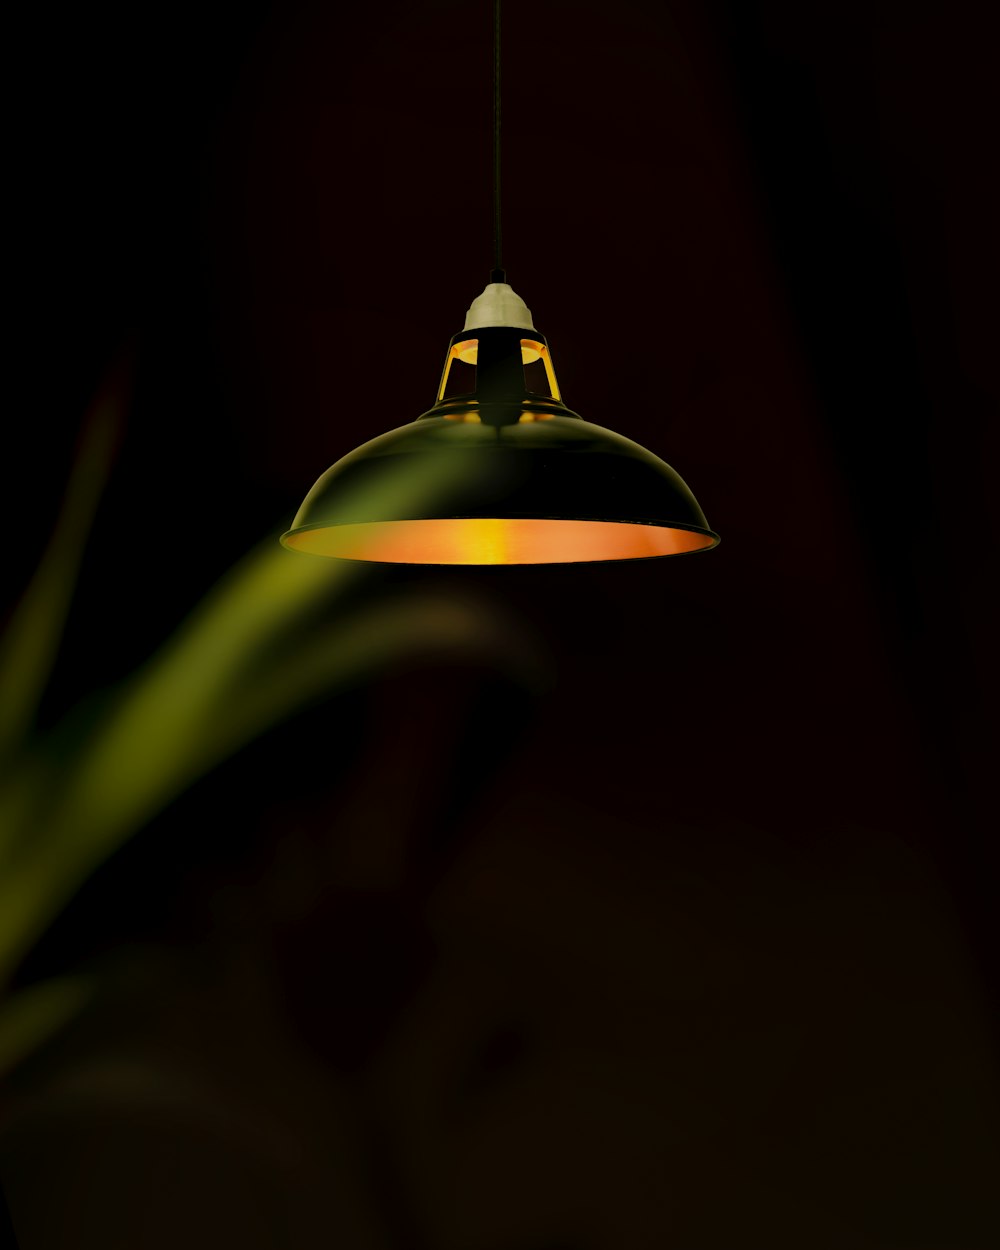 green pendant lamp turned on in dark room